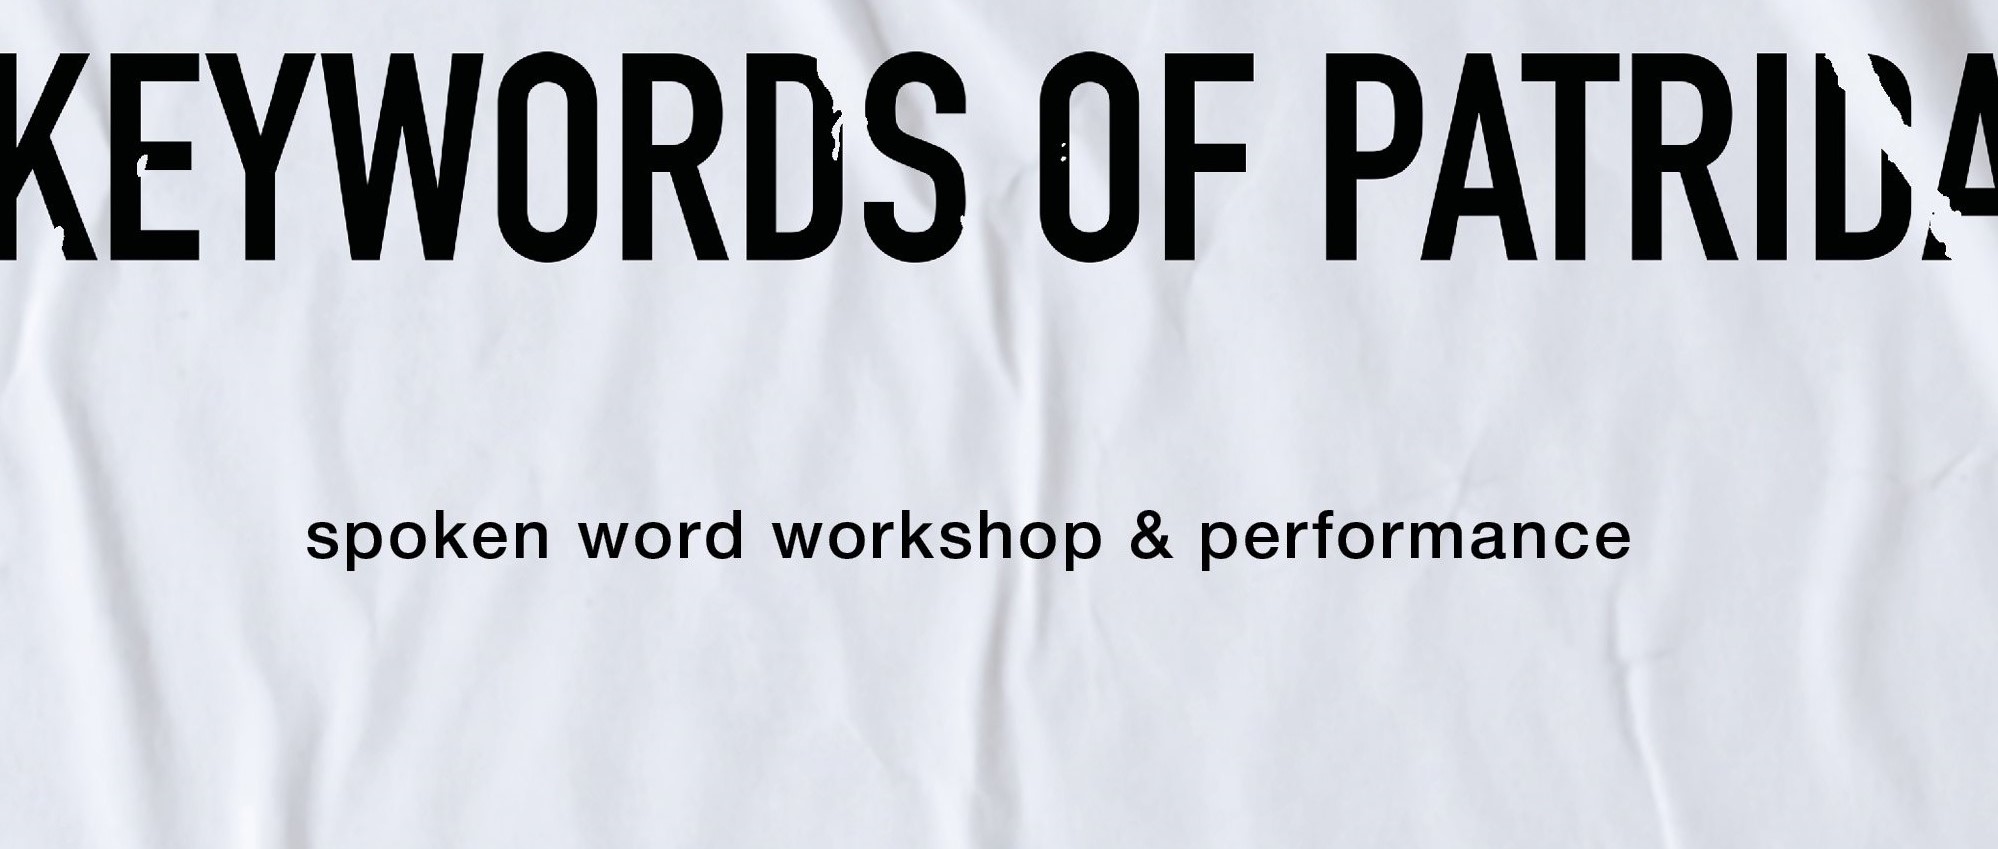 Keywords Of Patrida: Μια ολοήμερη πρωτοποριακή δράση με σκοπό τον προσδιορισμό της εποχής, της χώρας, του εαυτού